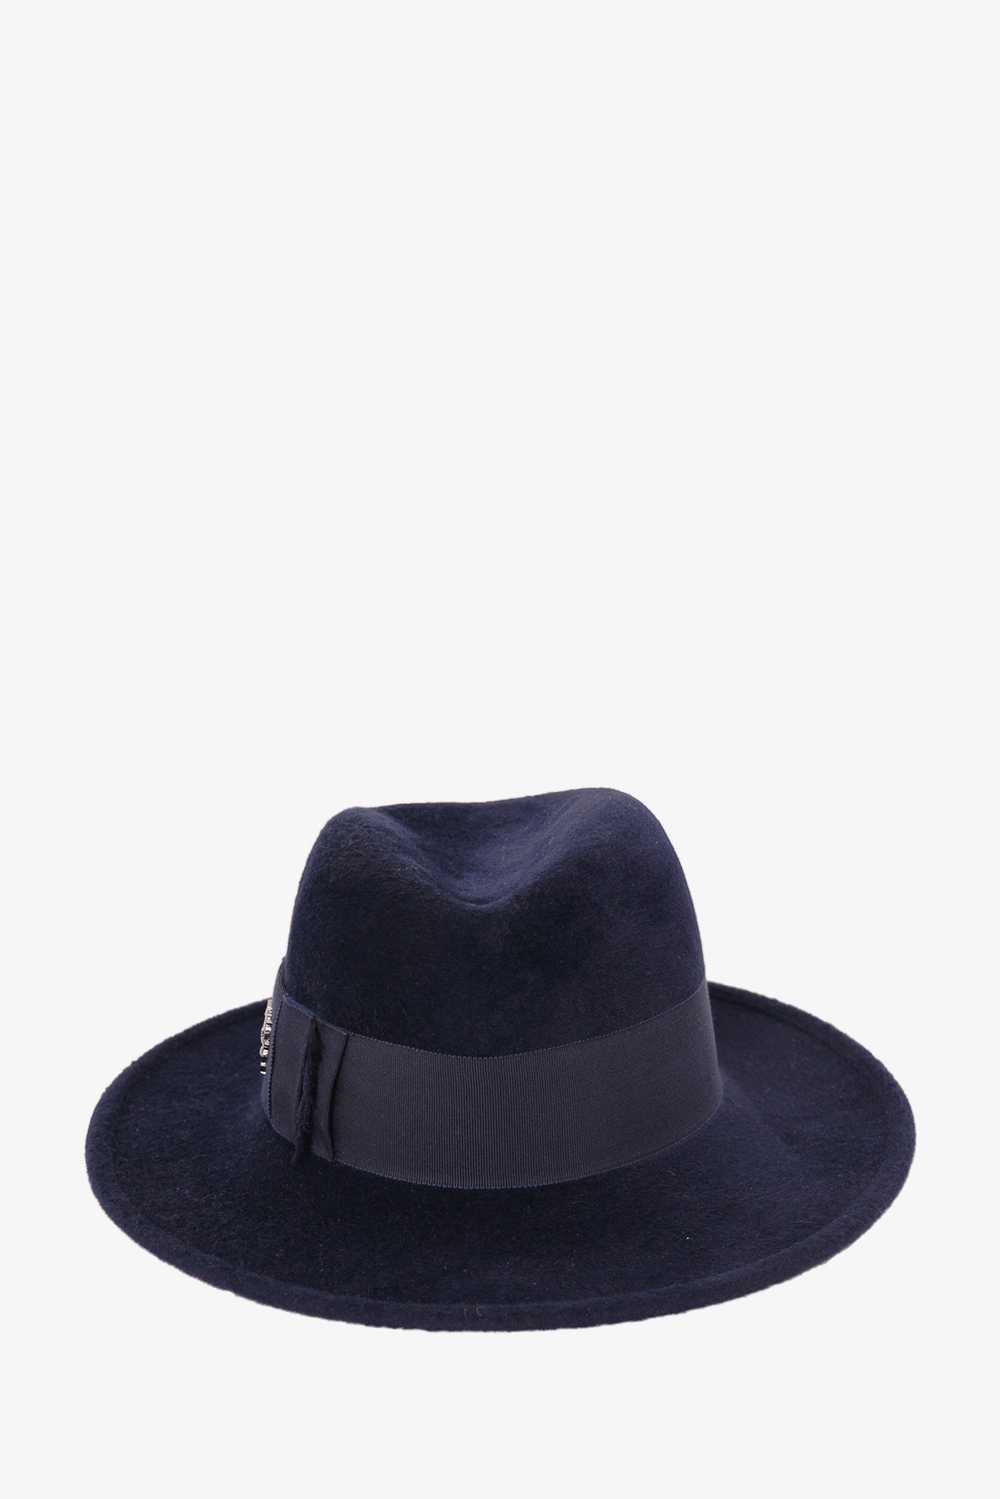 Philip Treacy Navy Wool Felt Bucket Hat - image 3